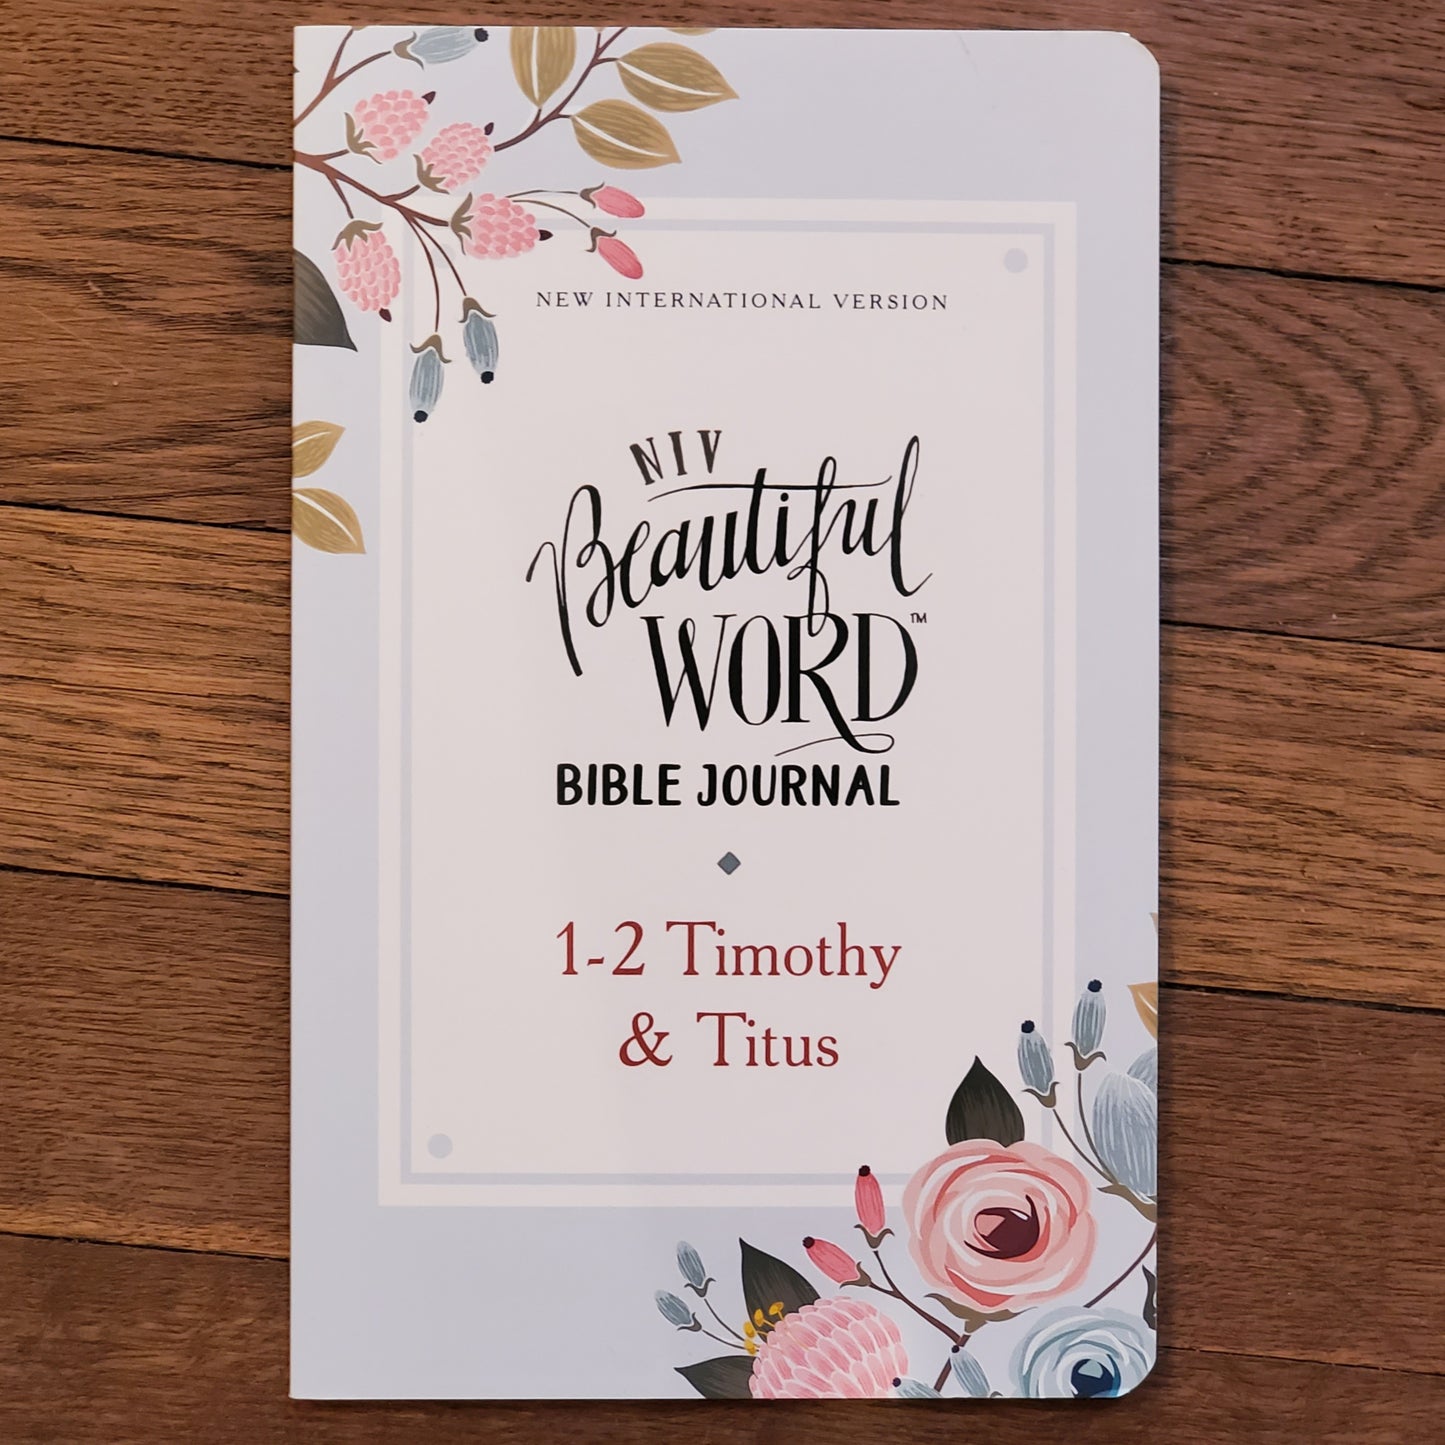 NIV Beautiful Word Bible Journal 1-2 Timothy & Titus